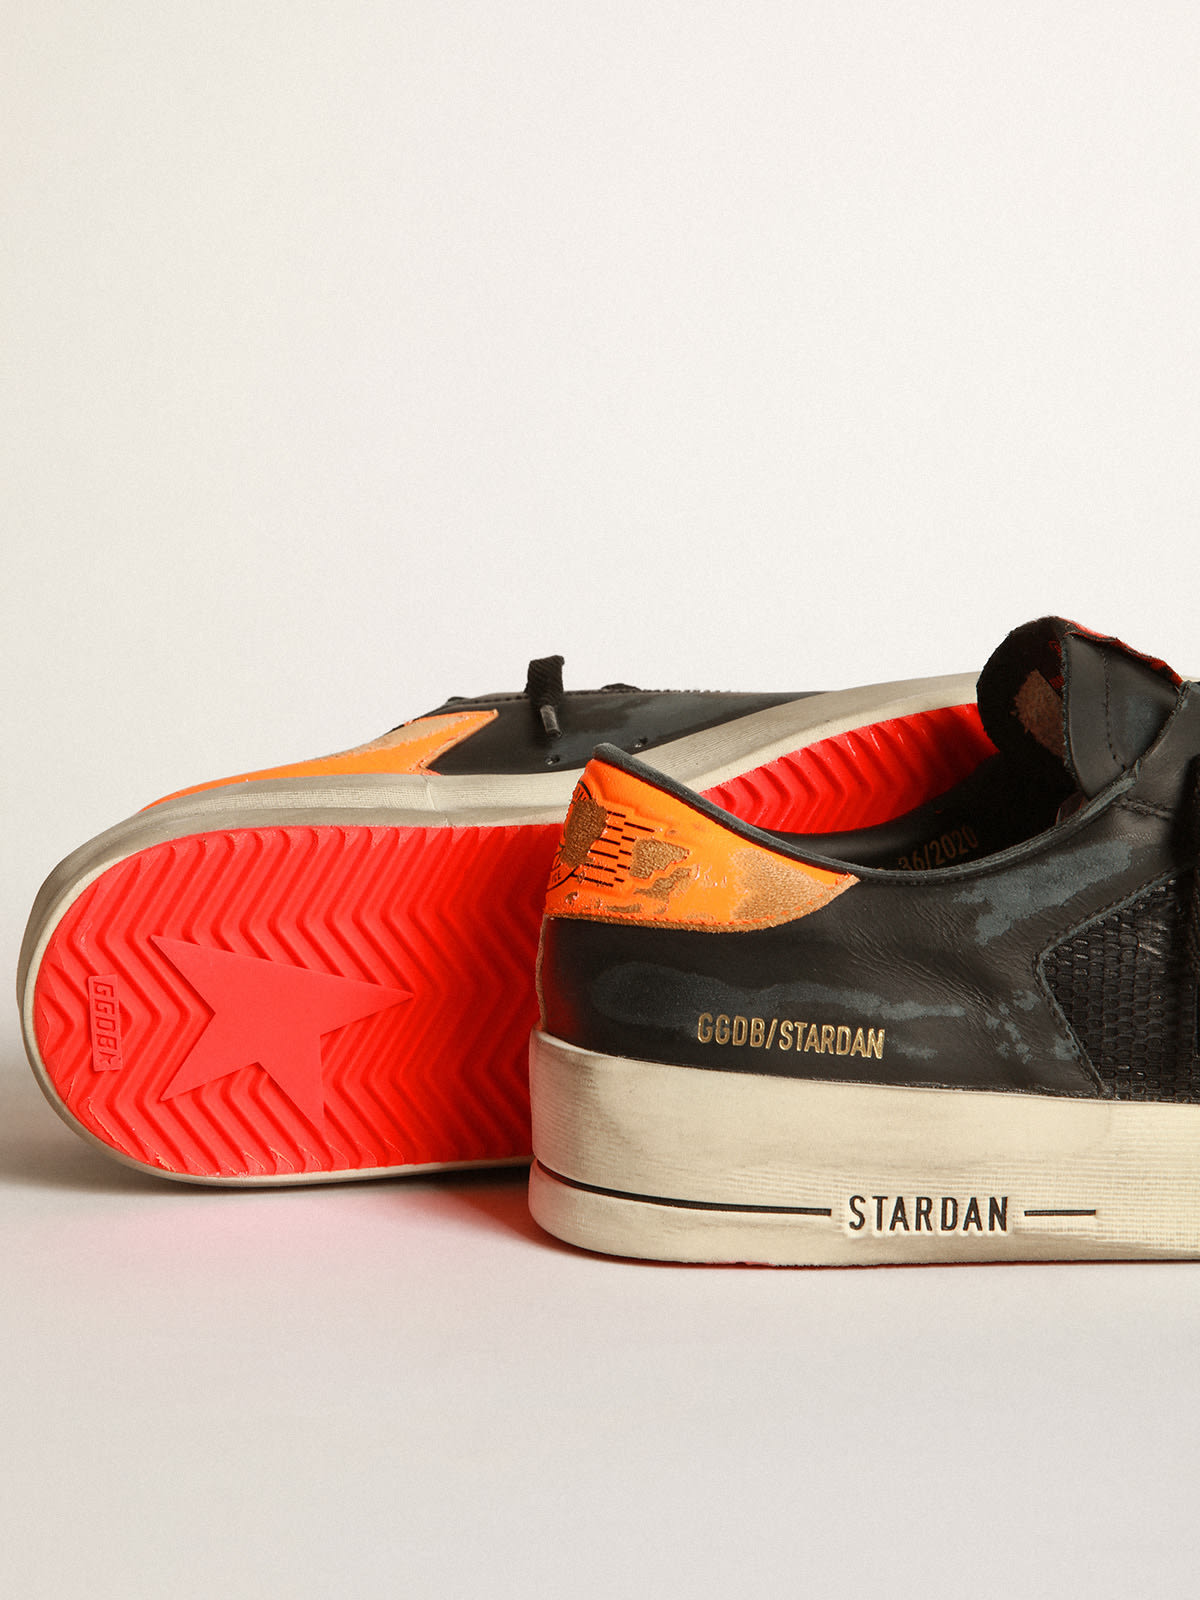 Golden Goose - Schwarze und orangefarbene Stardan Sneakers in 